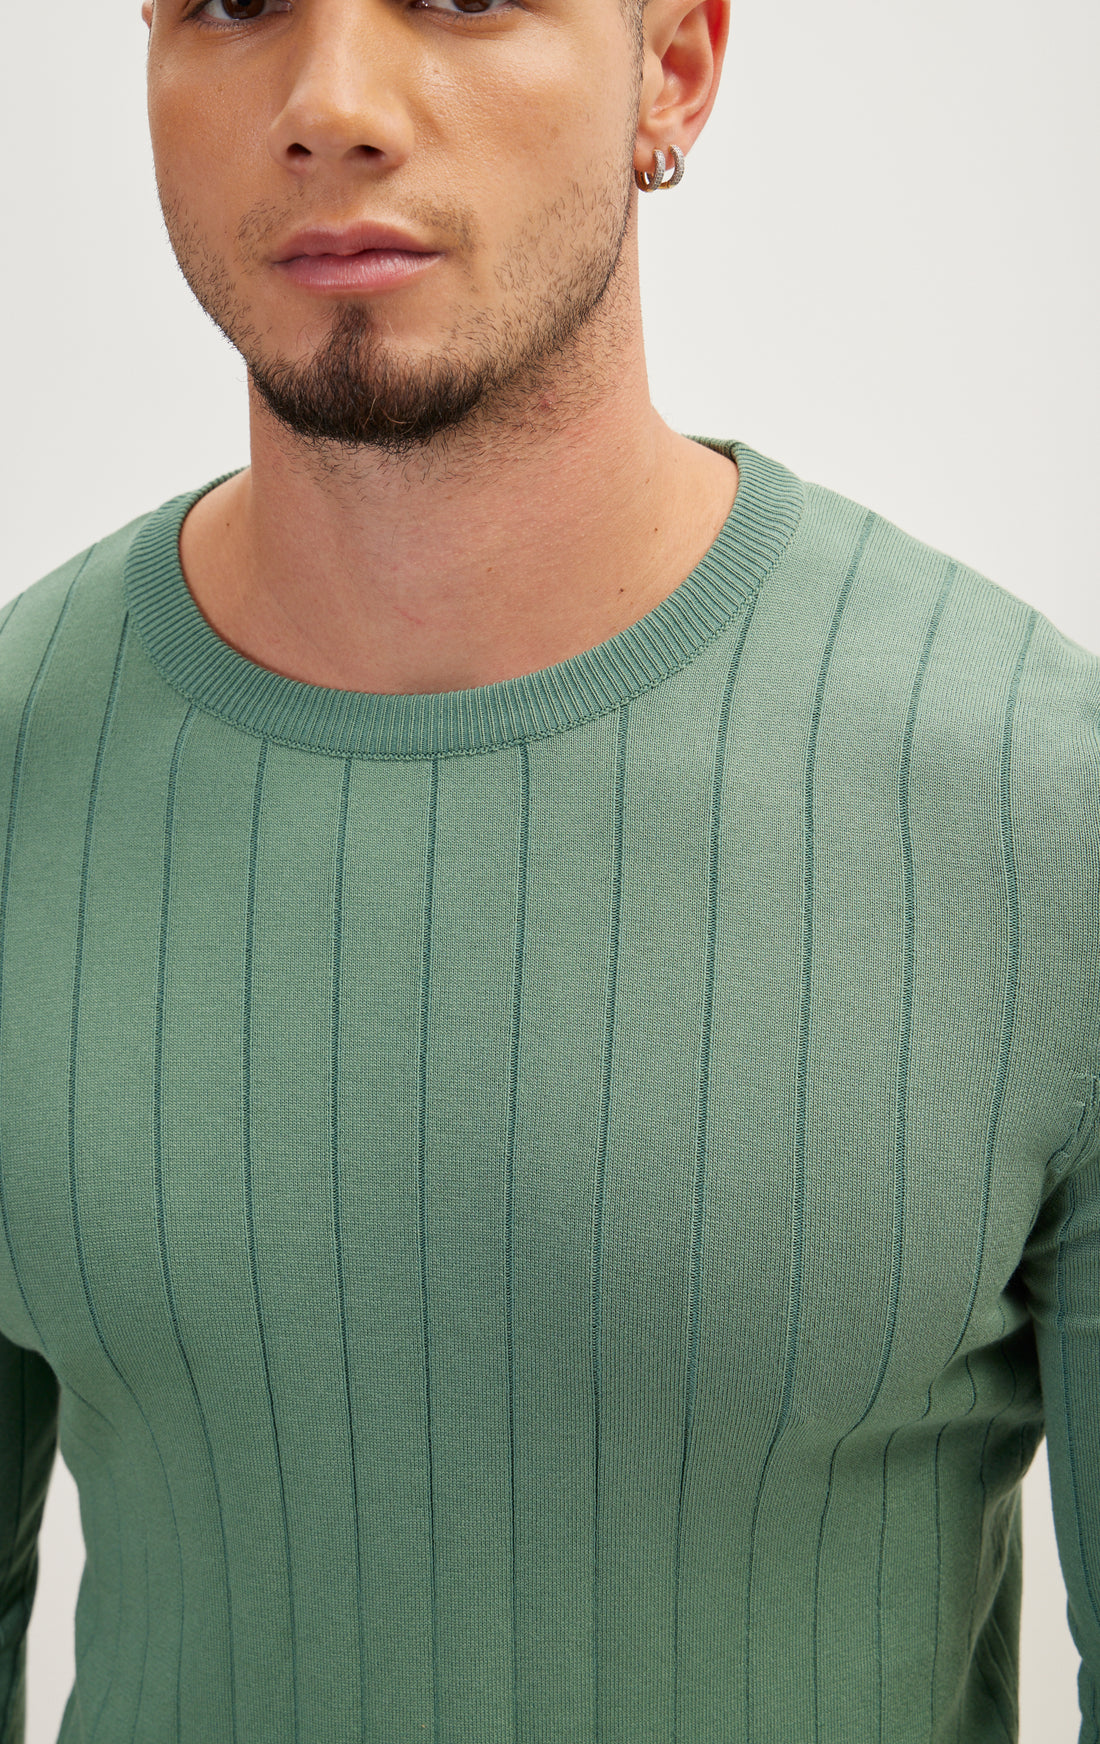 Slip-Stitch Crew Neck Long Sleeve Sweater - Green